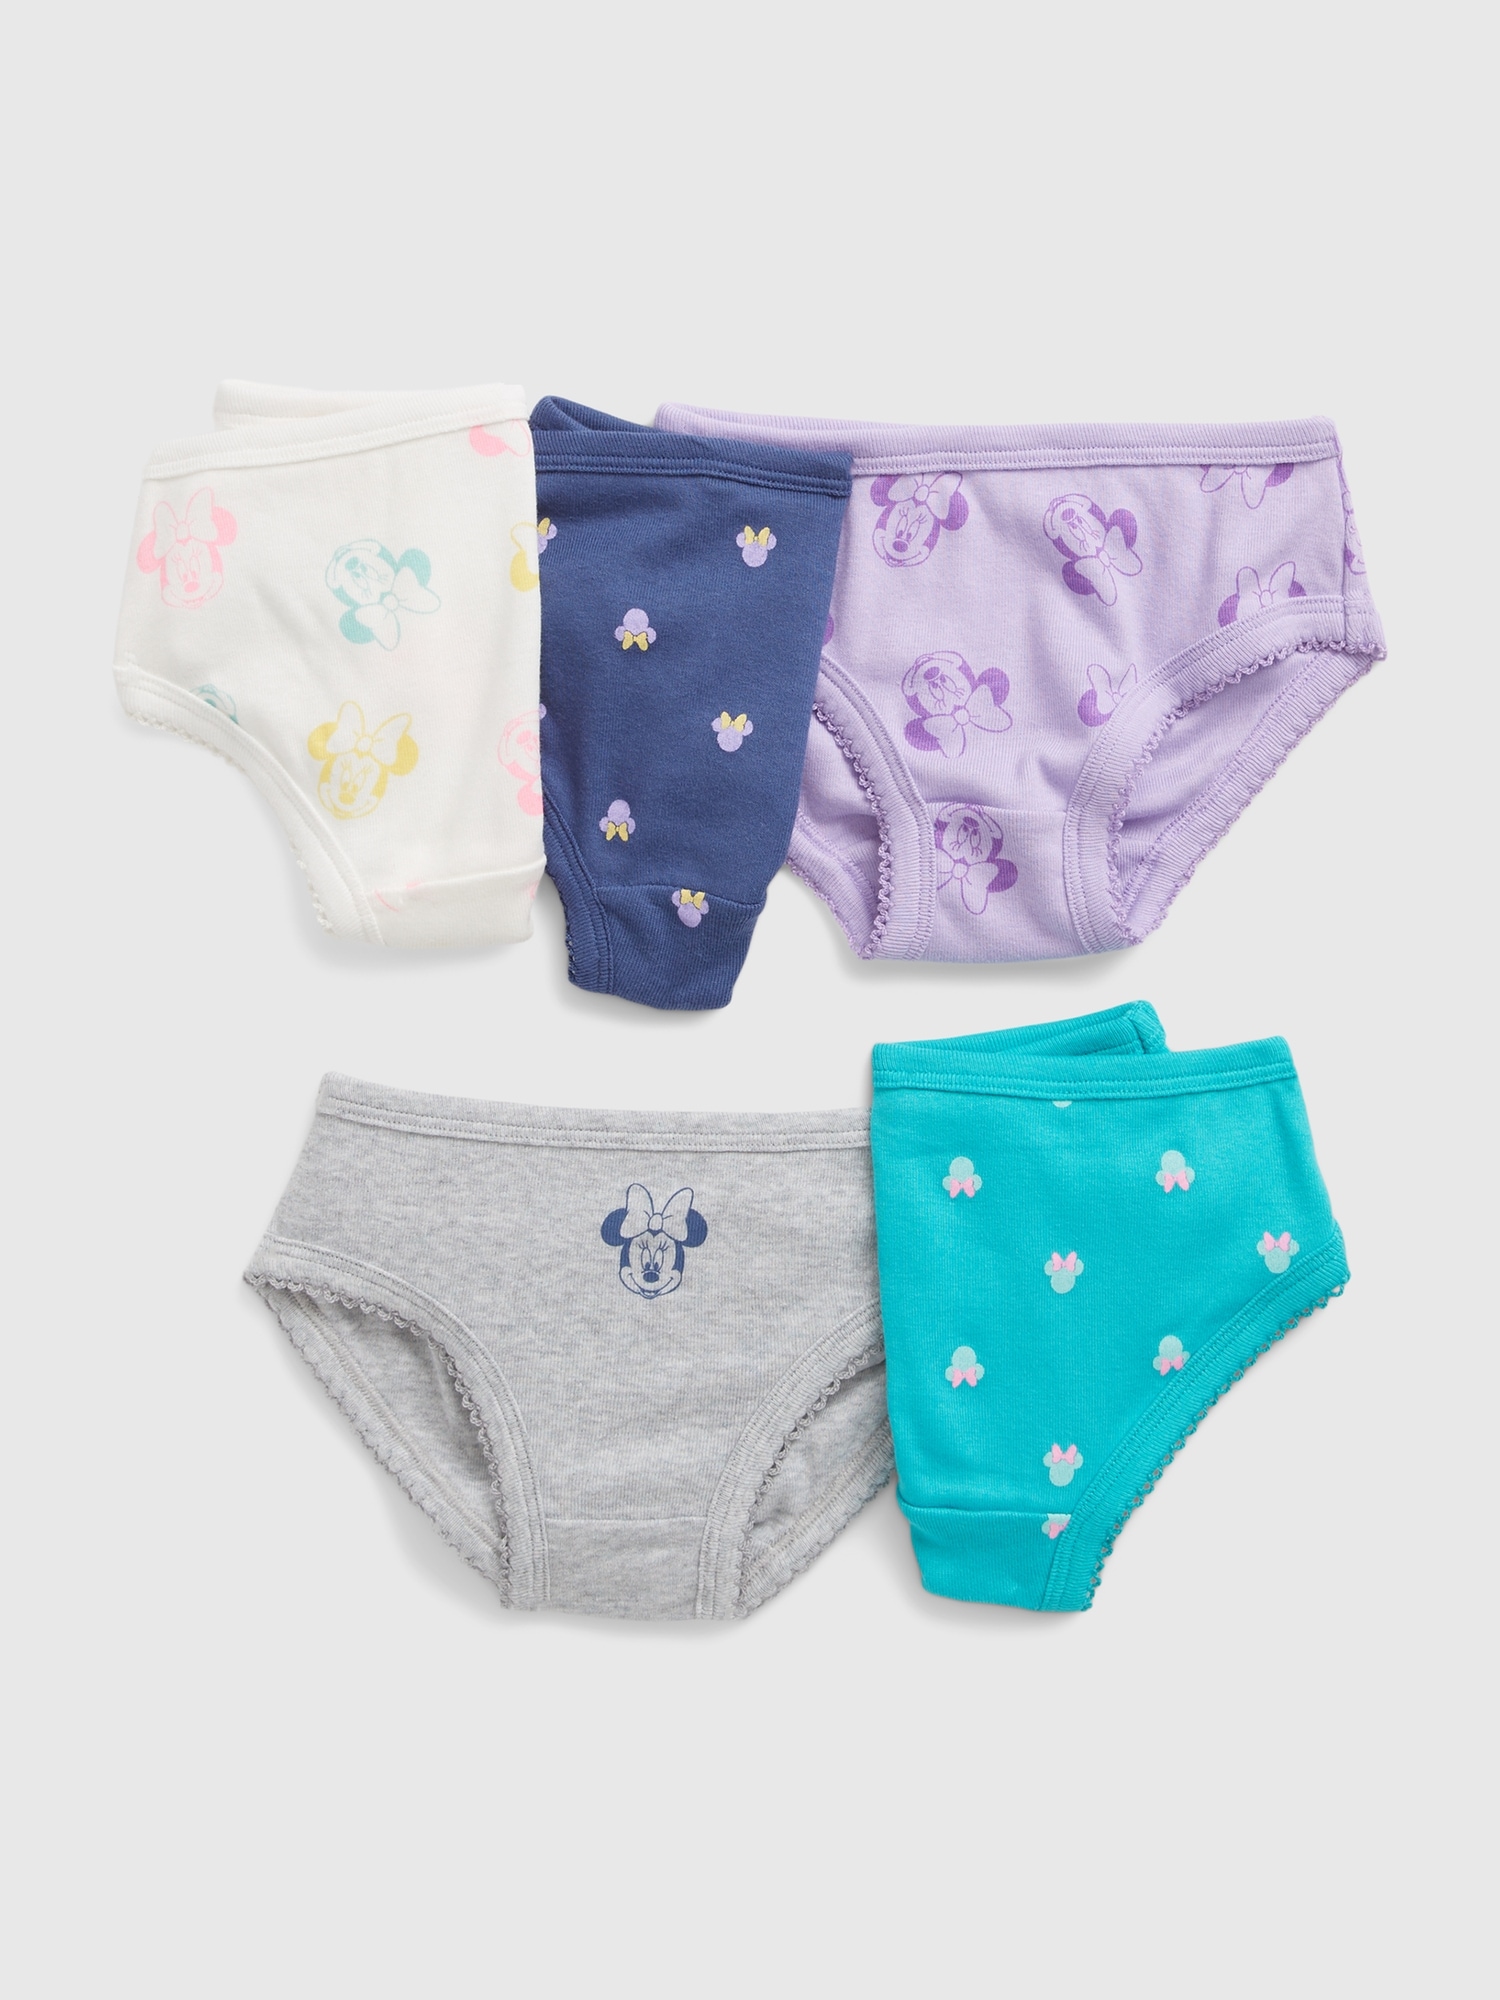 Toddler Girls Disney Junior Minnie Mouse Panties 3 Pack Underwear 2T/3T  45299069888